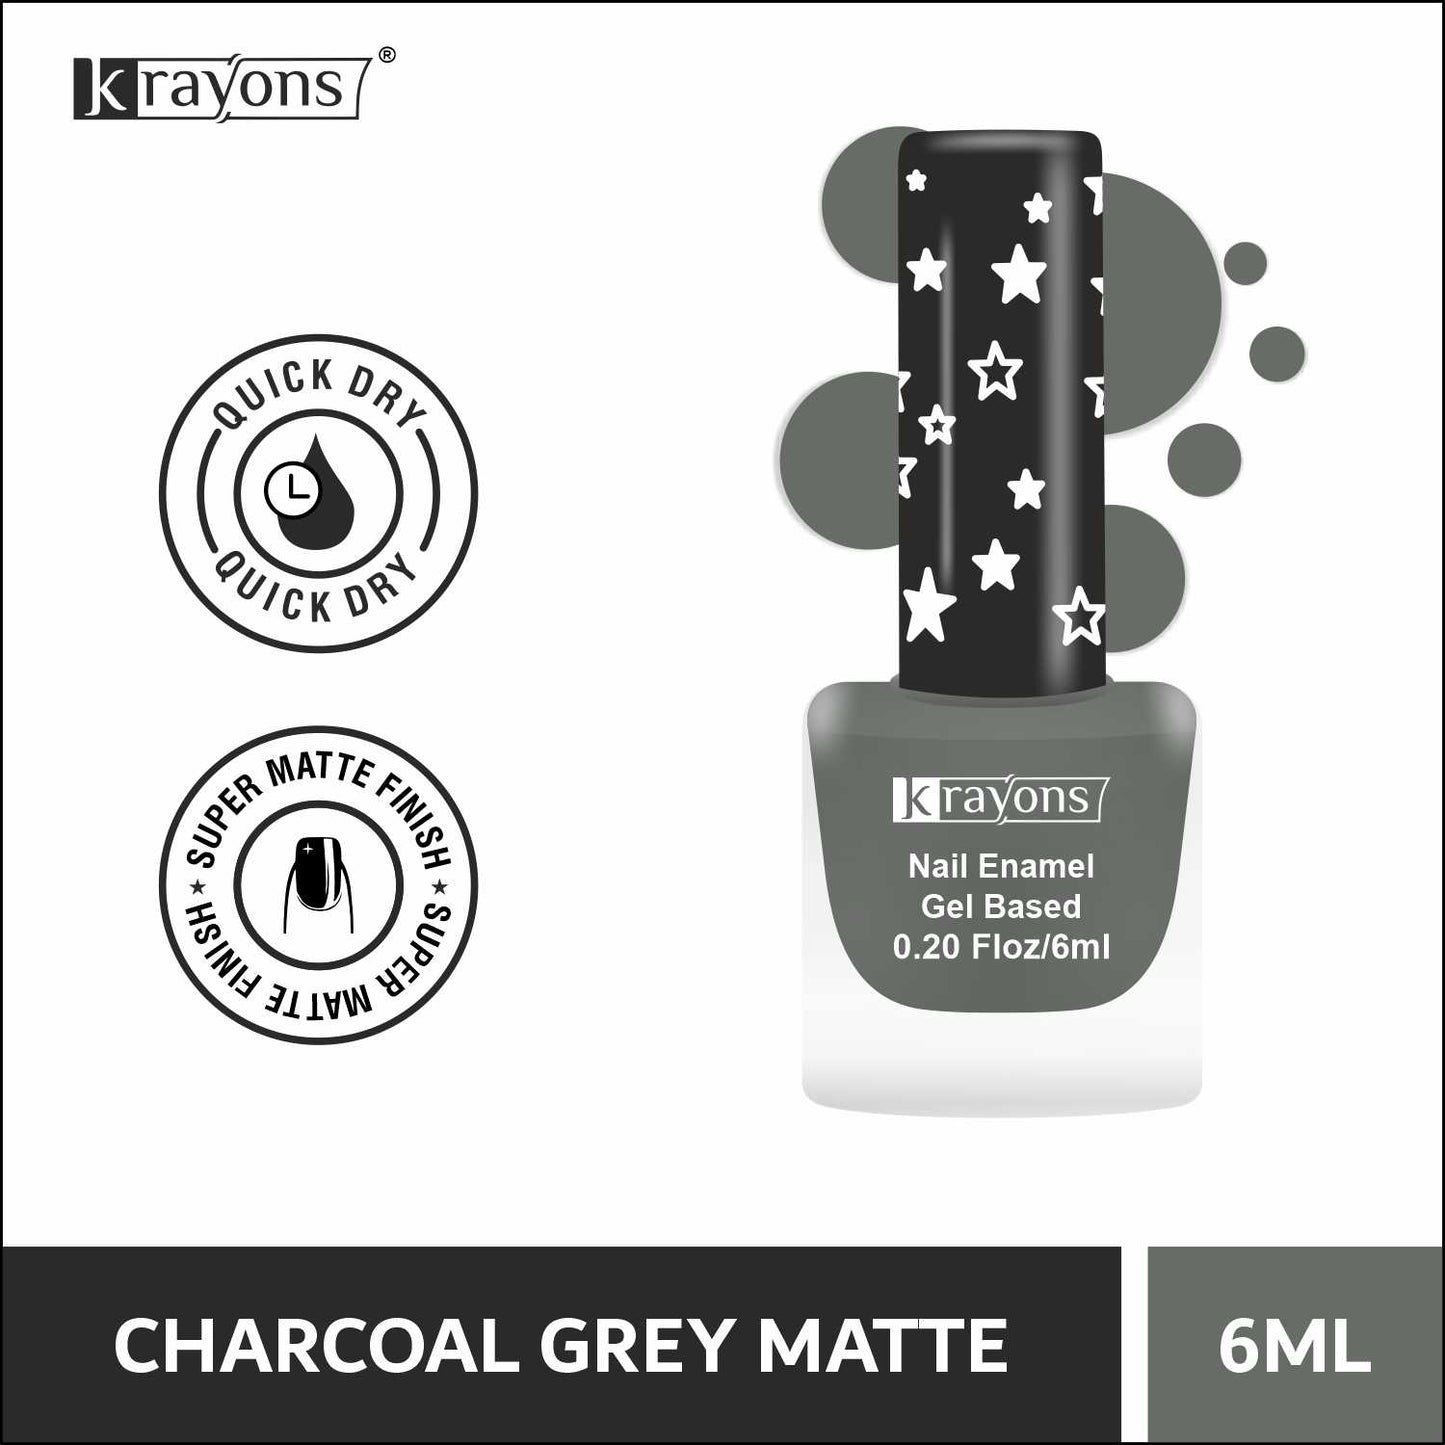 Krayons Cute Super Matte Finish Nail Enamel, Quick Dry, Smooth Finish, LongLasting, Charcoal Grey, 6ml